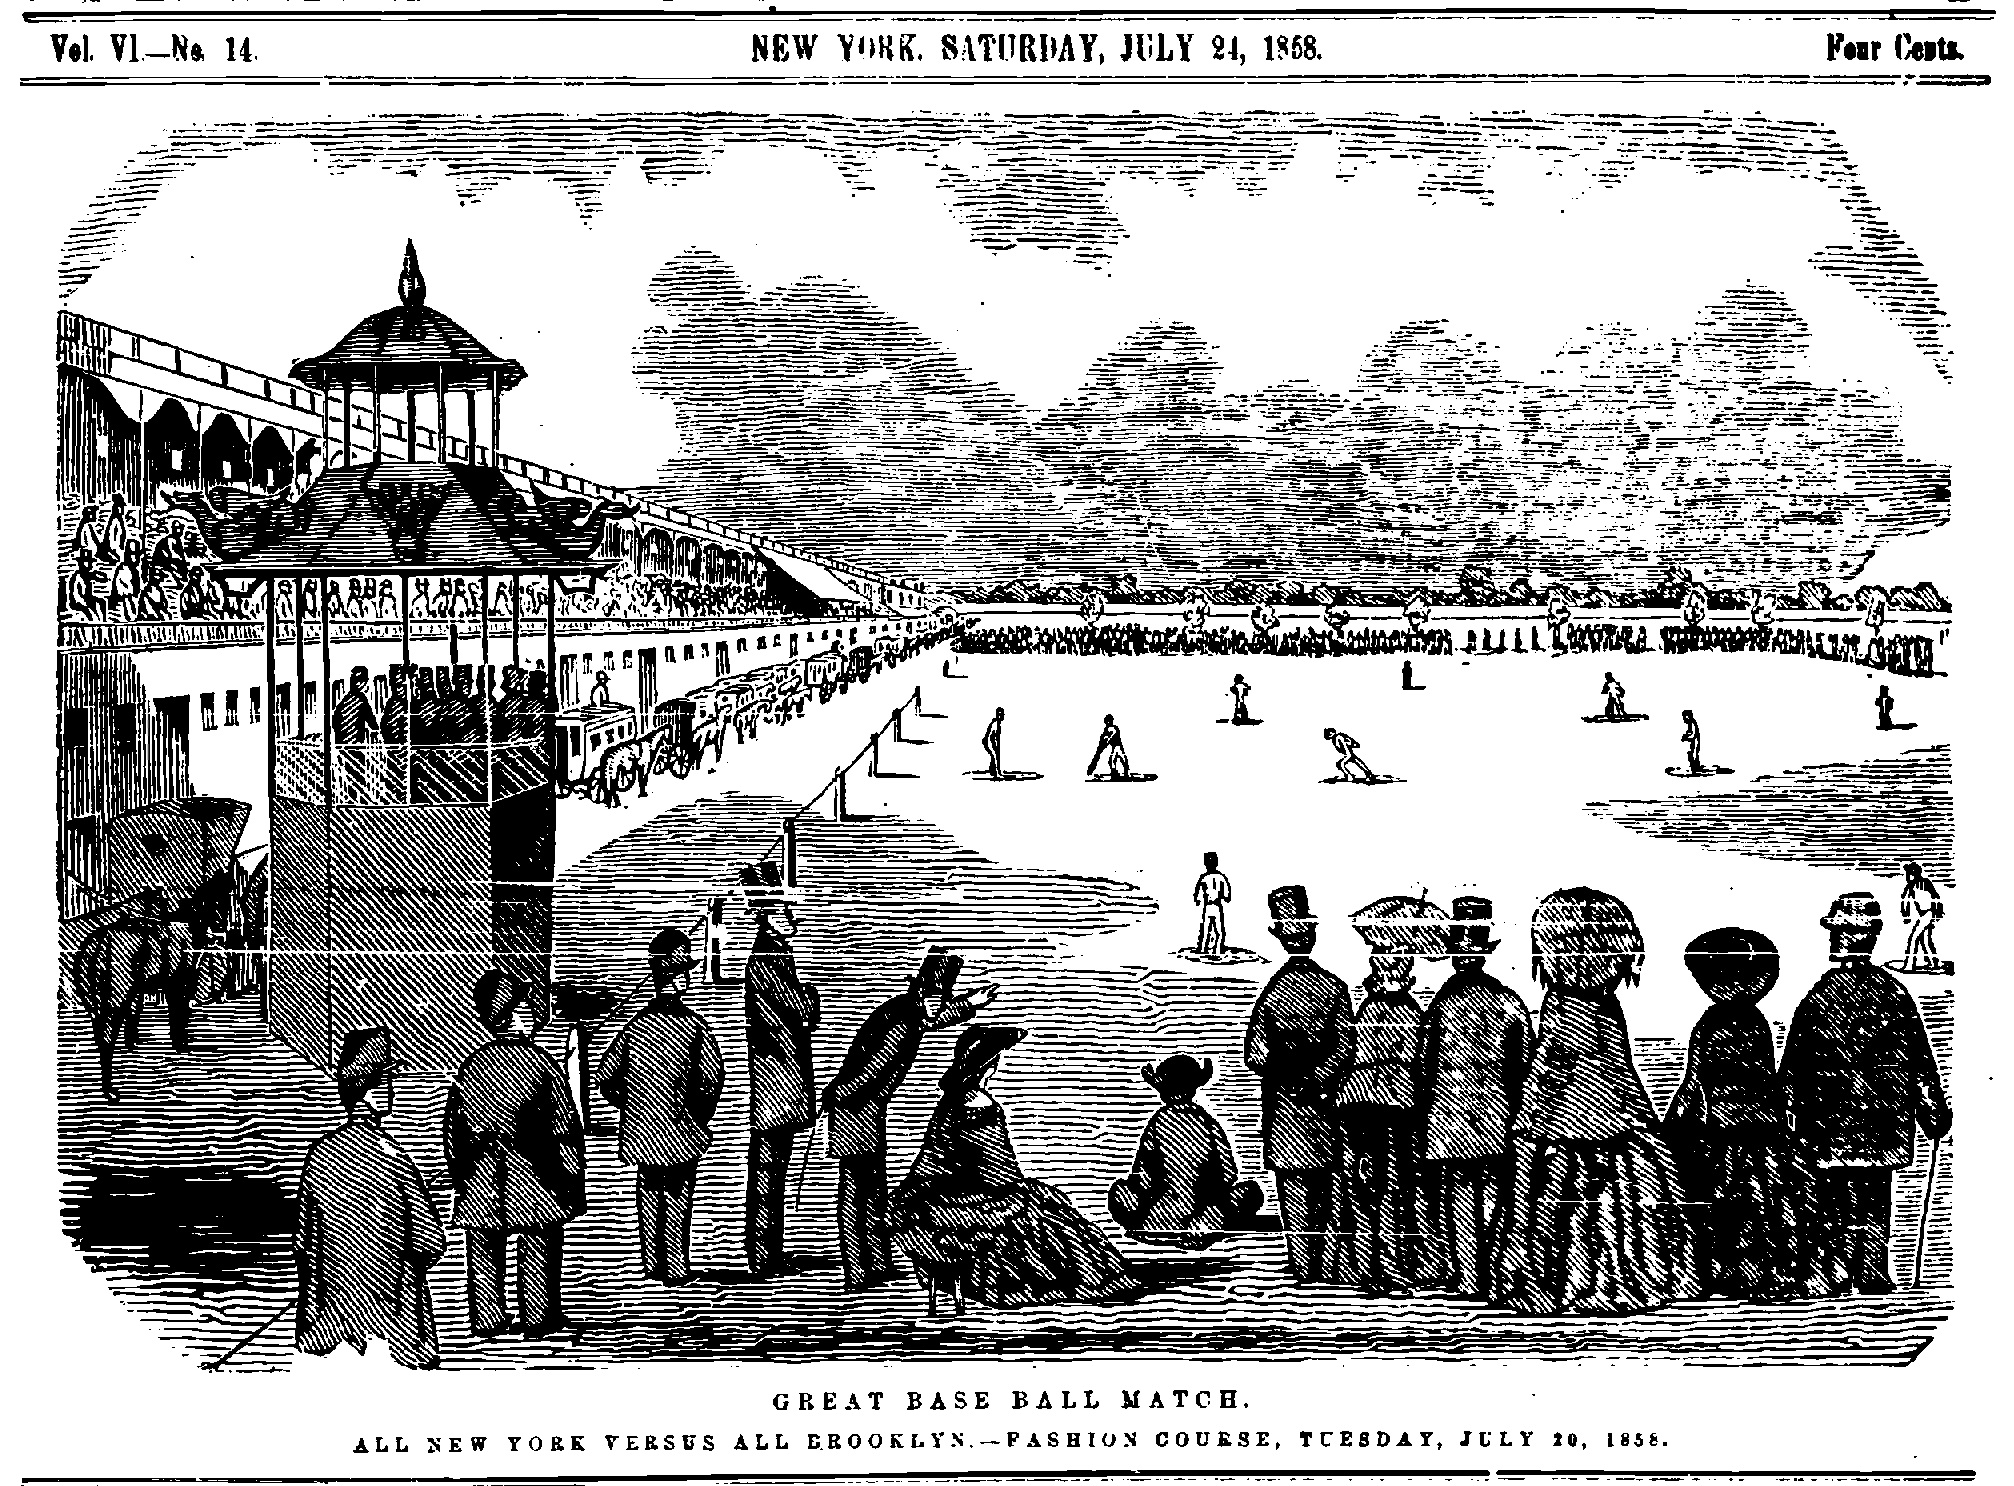 New York Clipper, July 24, 1858